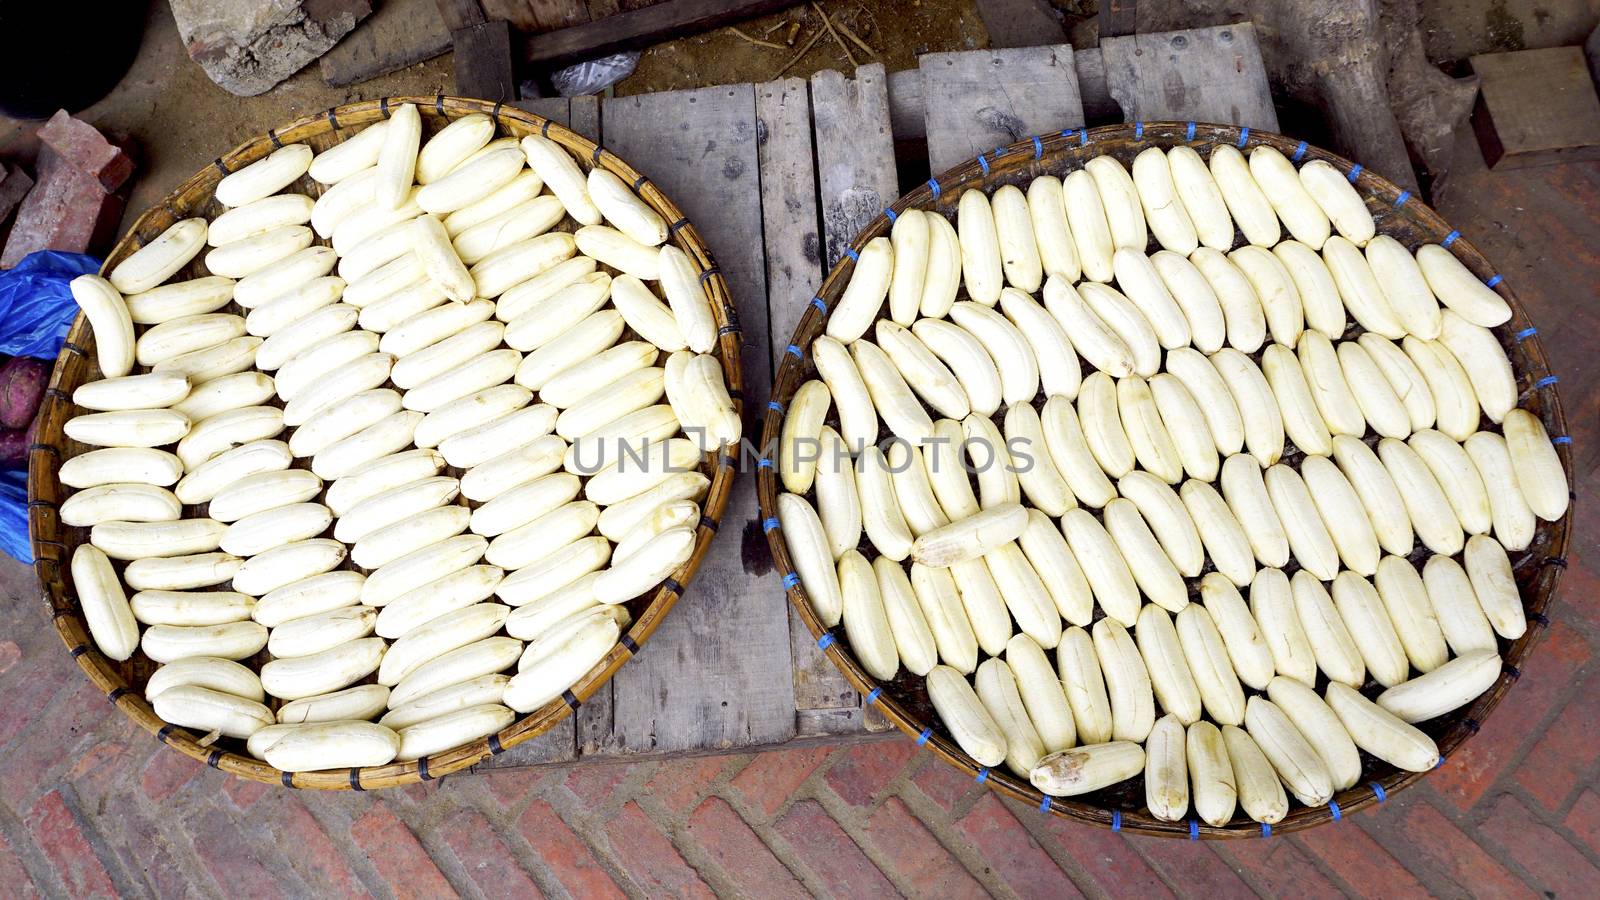 peeled banana in the baskets  by polarbearstudio